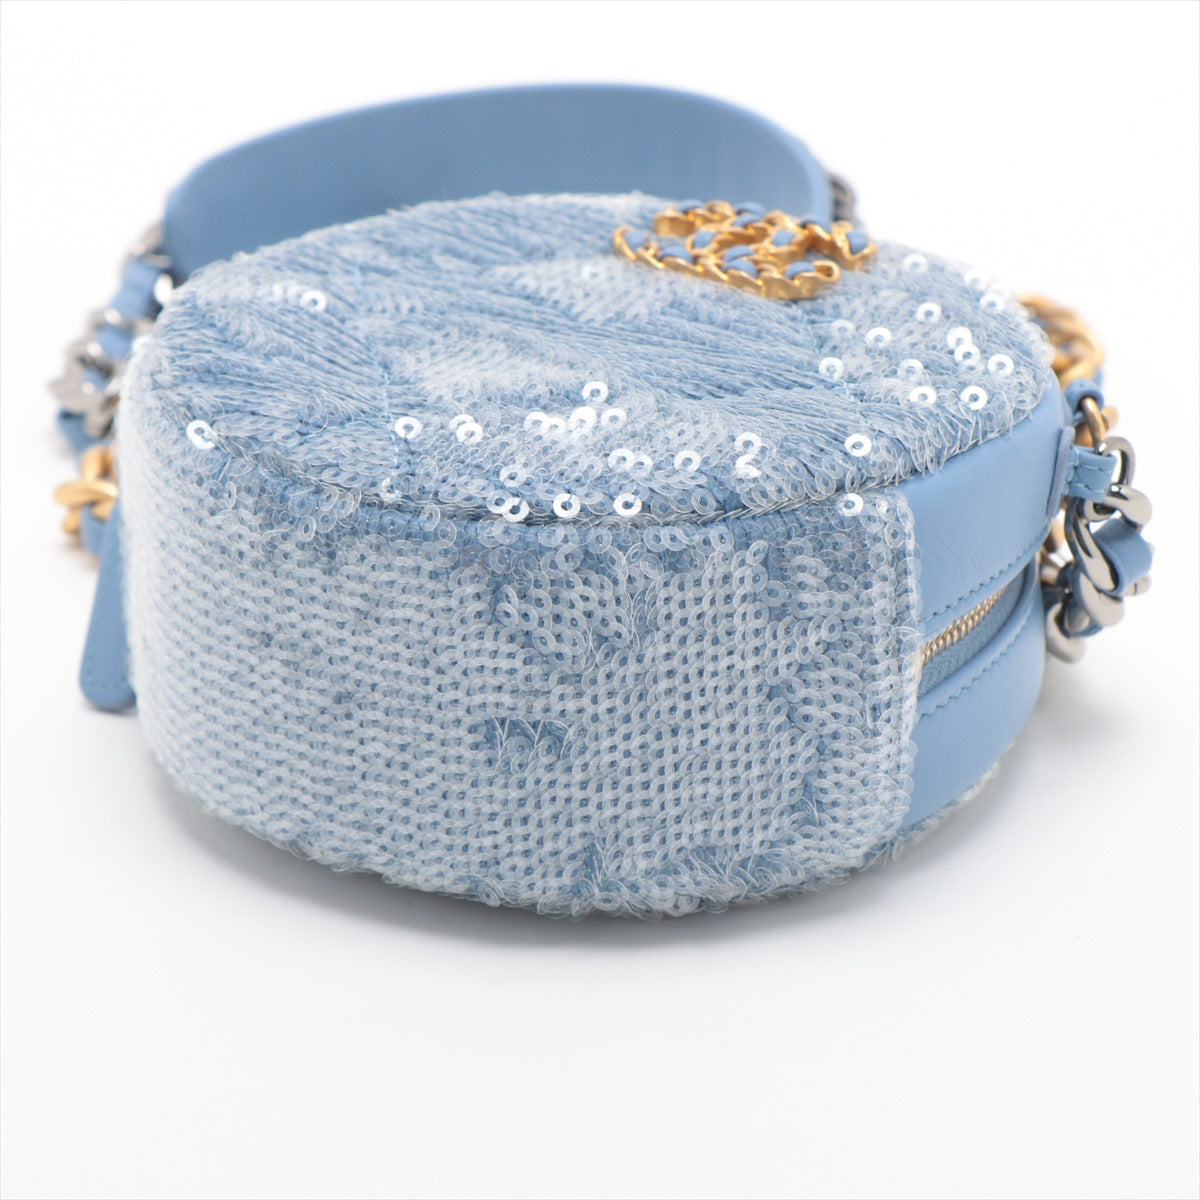 Chanel Matelasse sequins x lambskin Shoulder bag Blue Gold x silver metal fittings 30